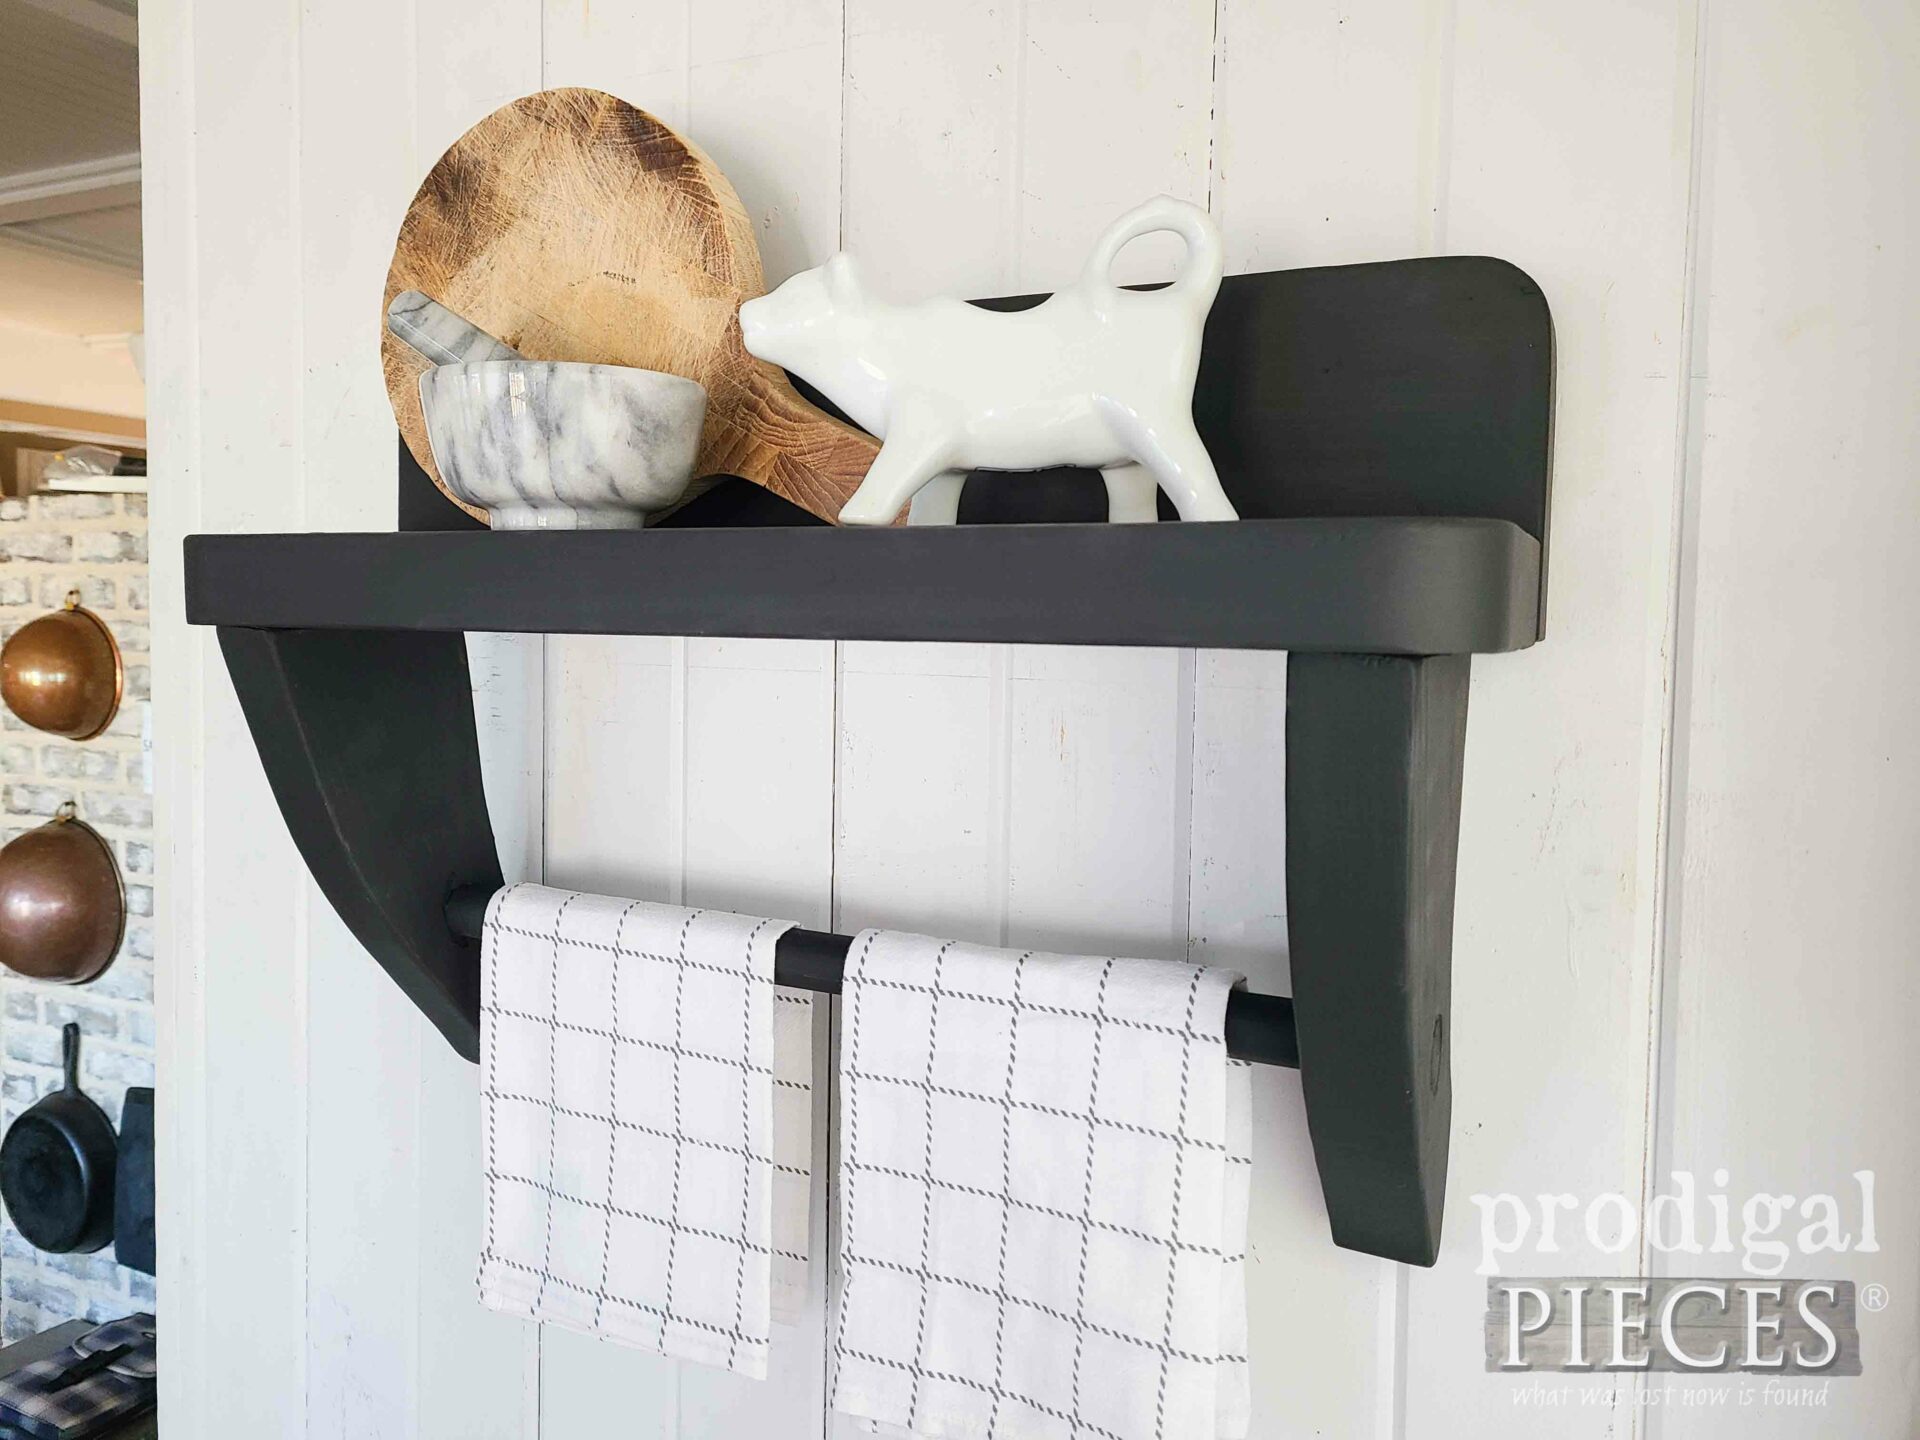 Black Farmhouse Shelf with Towel Rack by Larissa of Prodigal Pieces | prodigalpieces.com #prodigalpieces